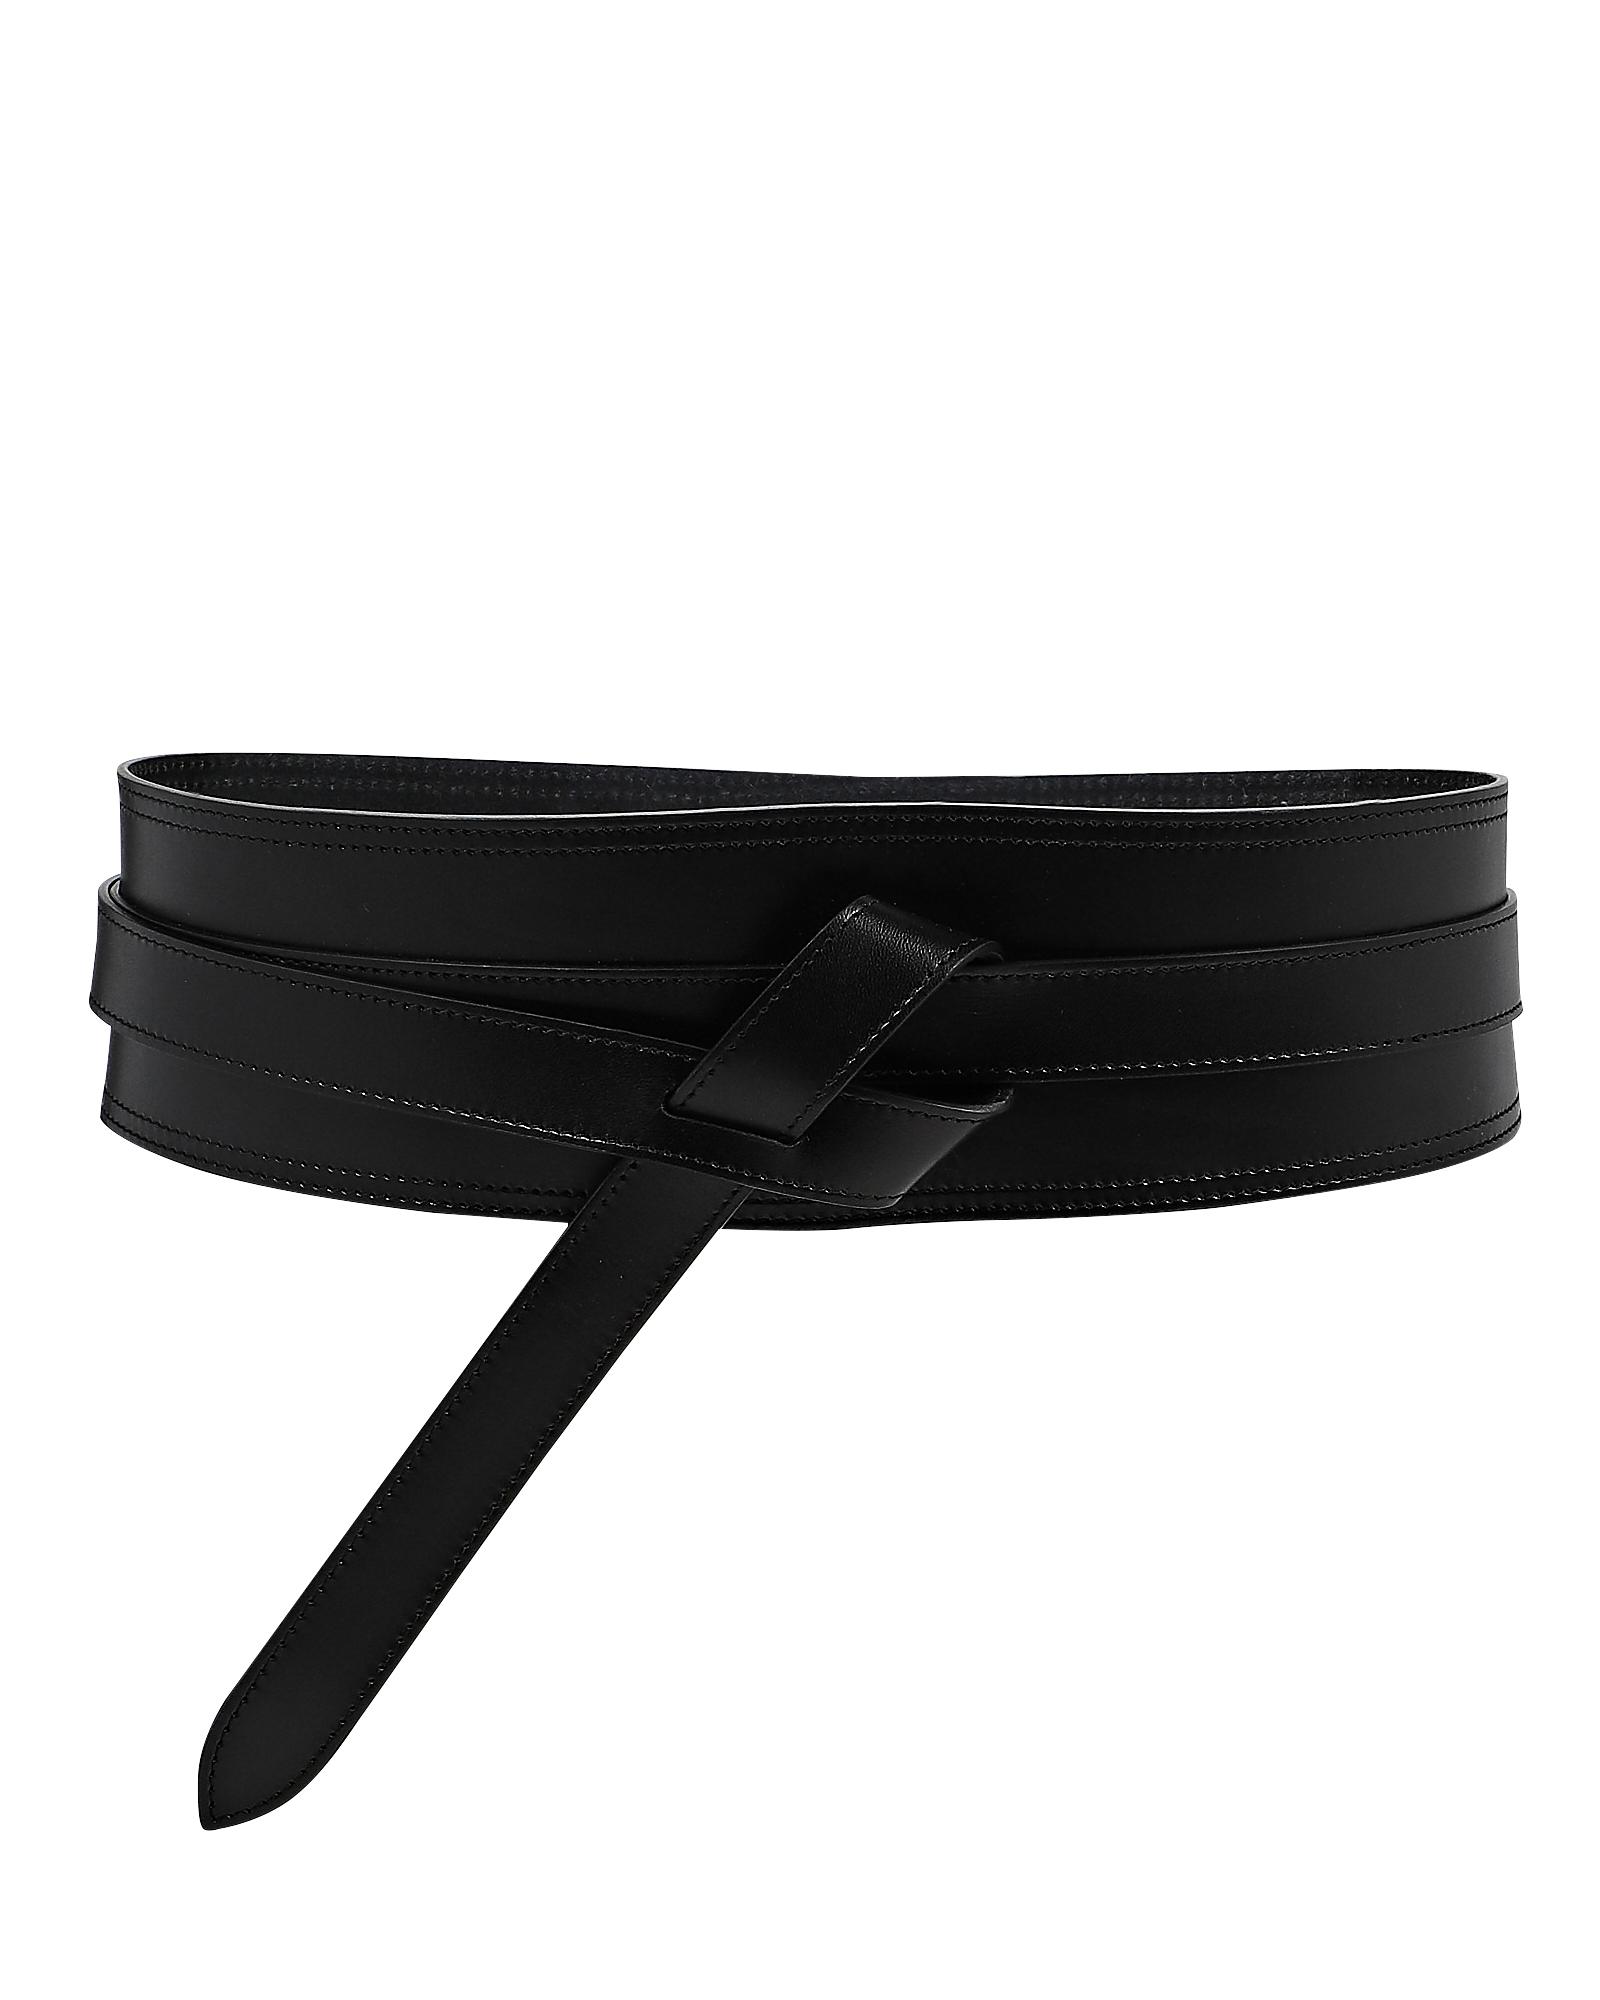 Isabel Marant Moshy Knot Leather Waist Belt in Black | Lyst